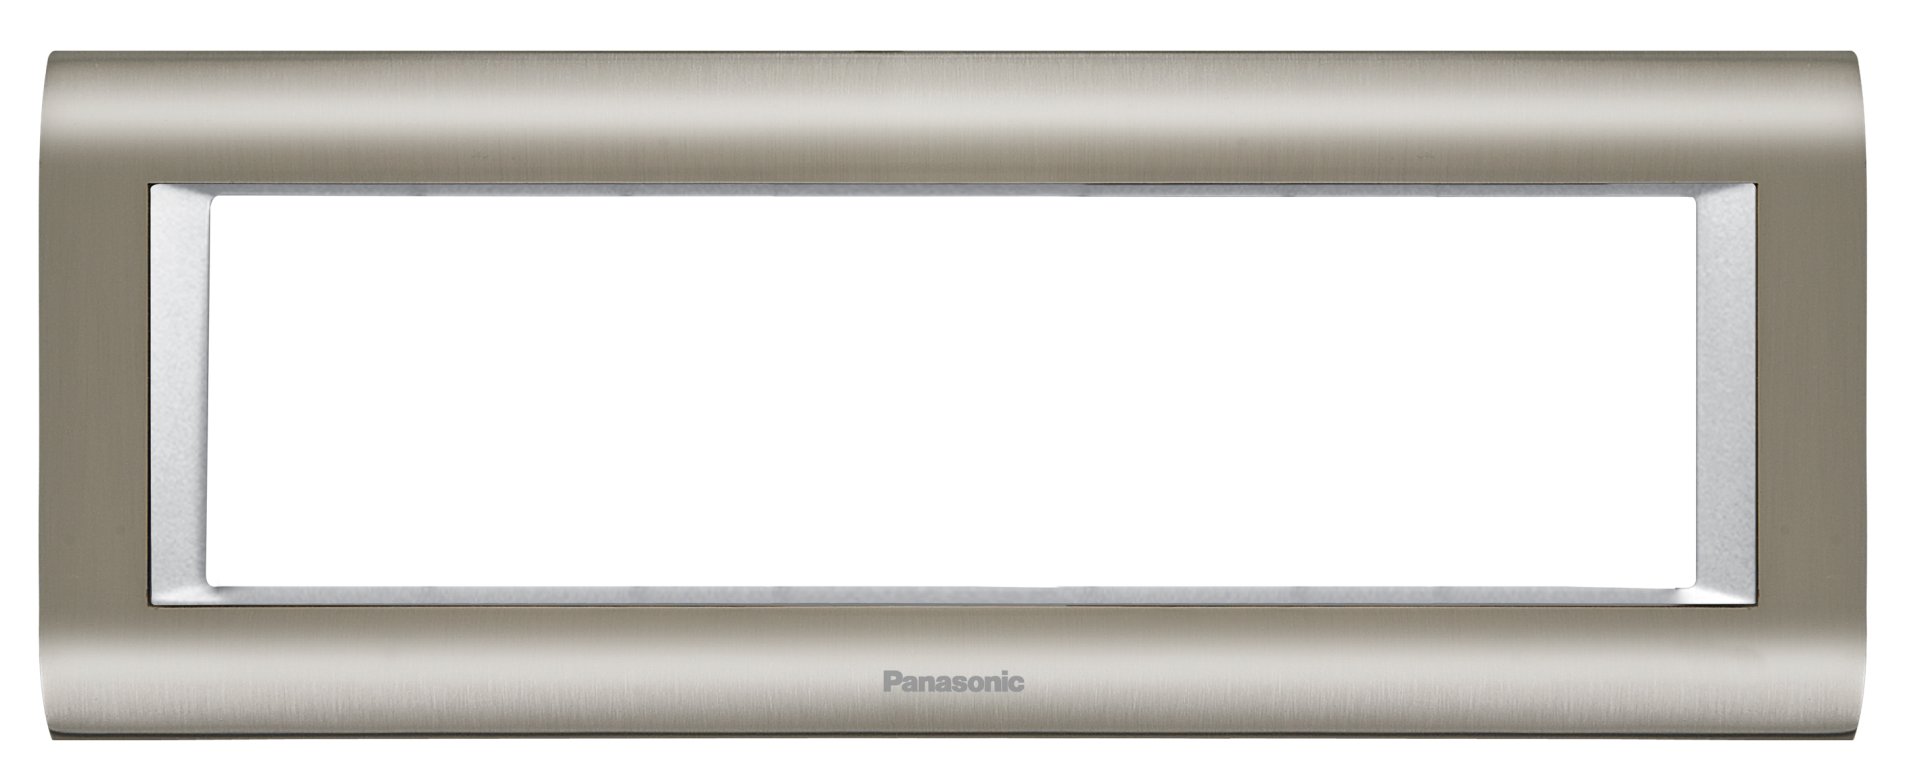 Viko Panasonic Thea Sistema 7M İnox Metalik Beyaz Çerçeve